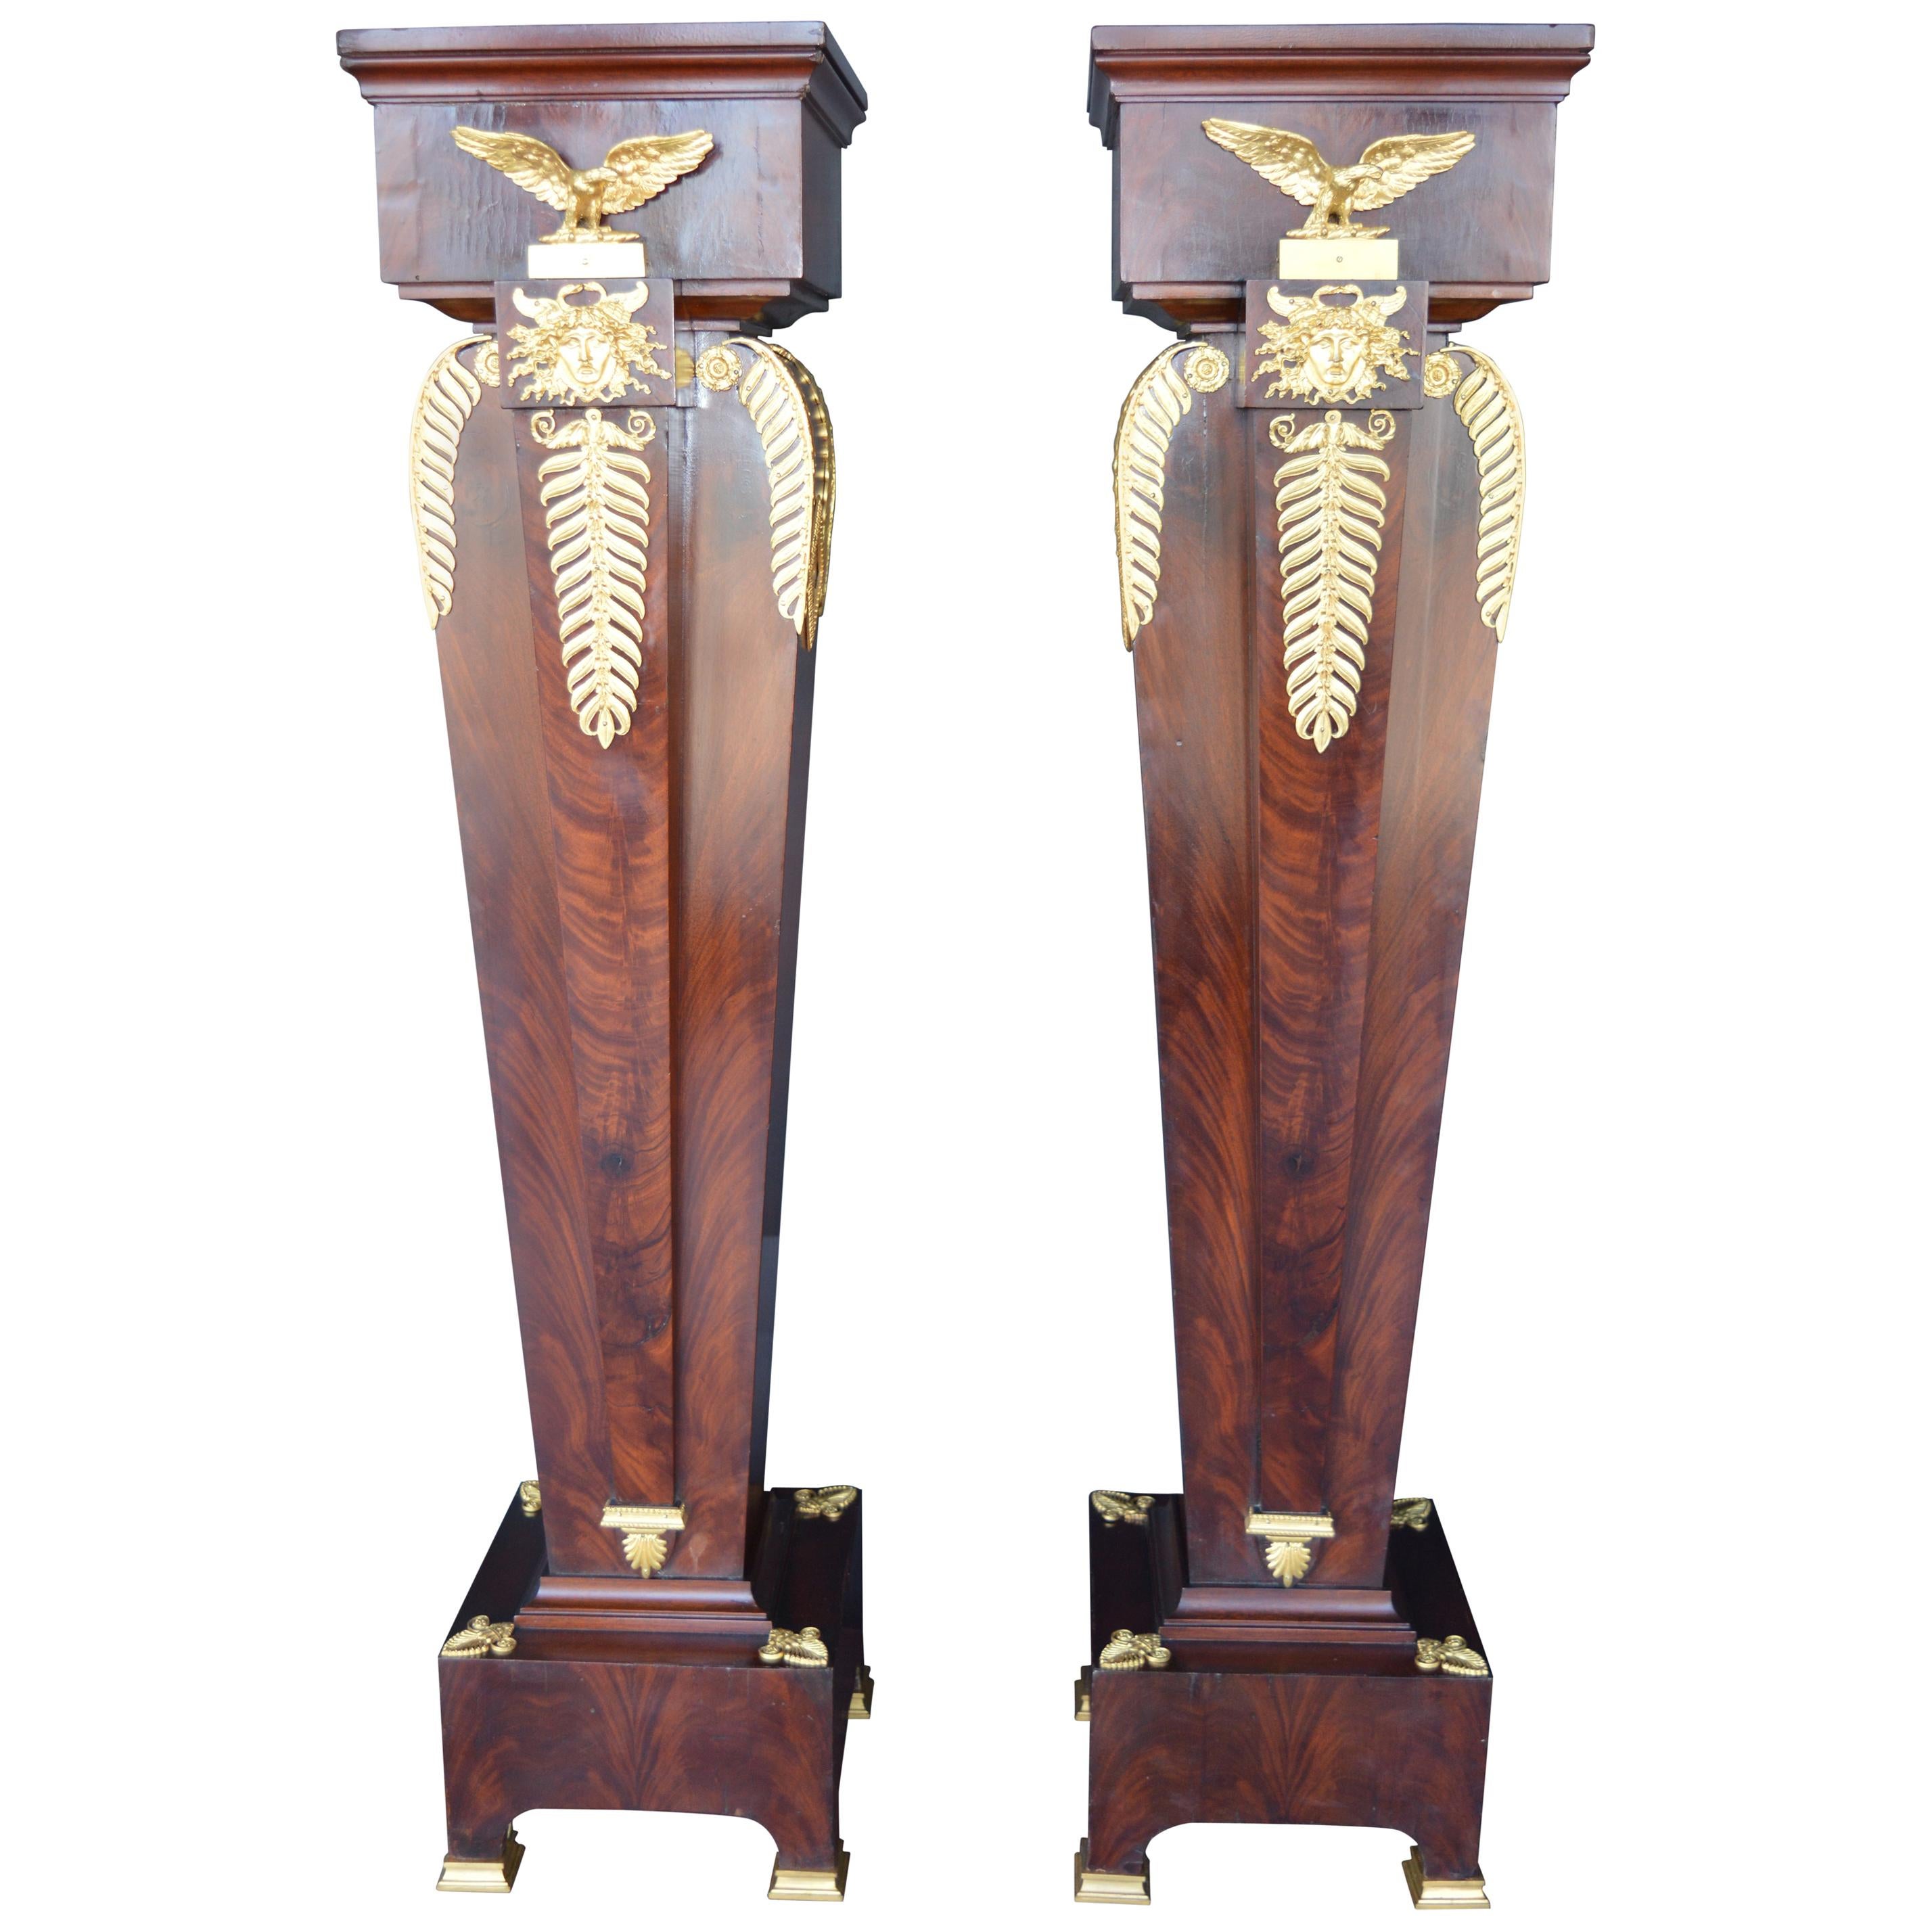 Pair of Empire Style Pedestals, 19th Century